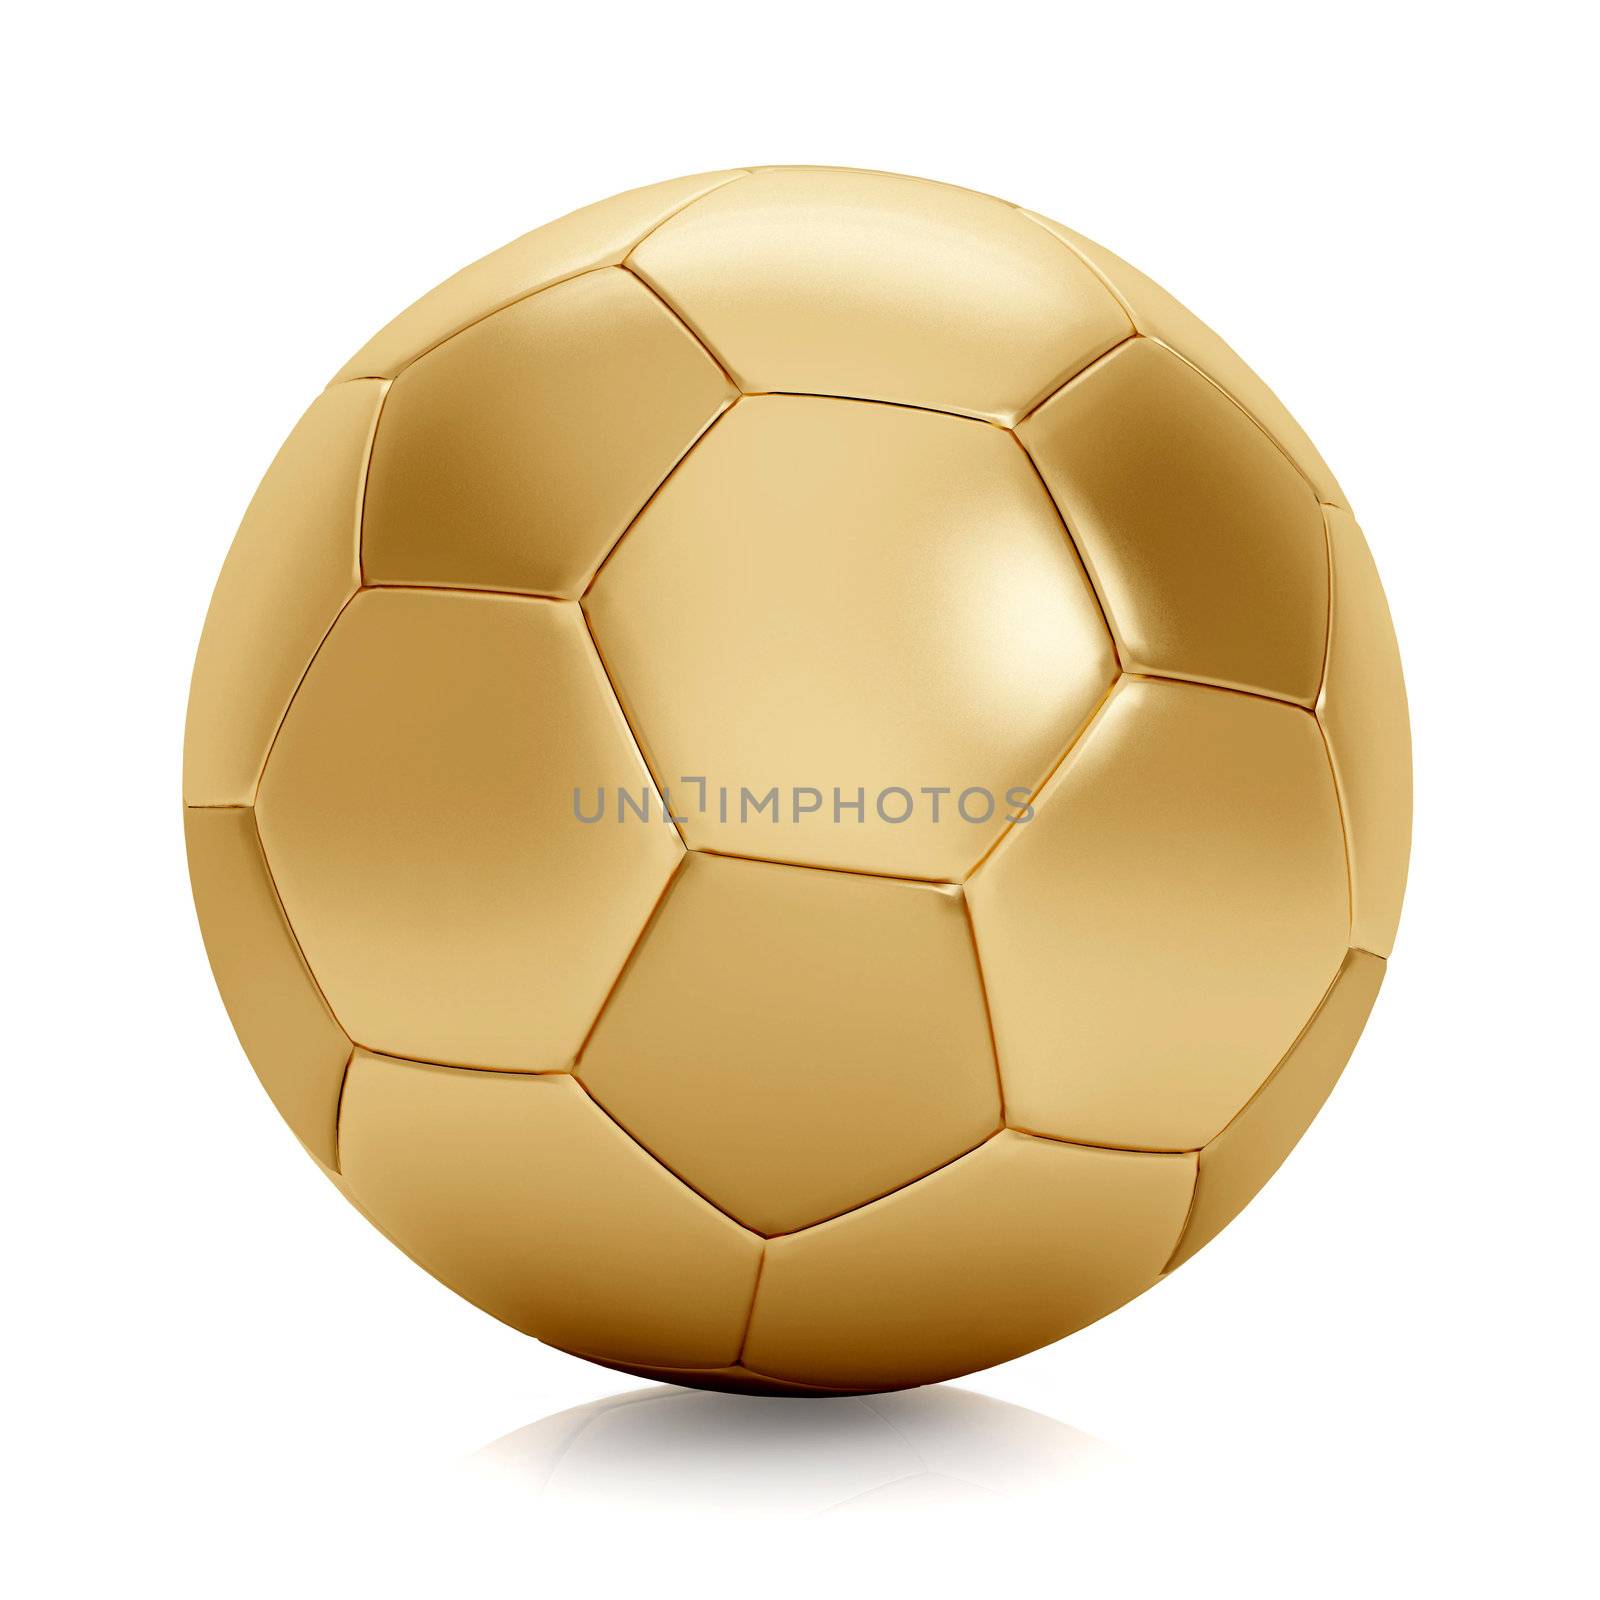 Soccer ball by Shmer